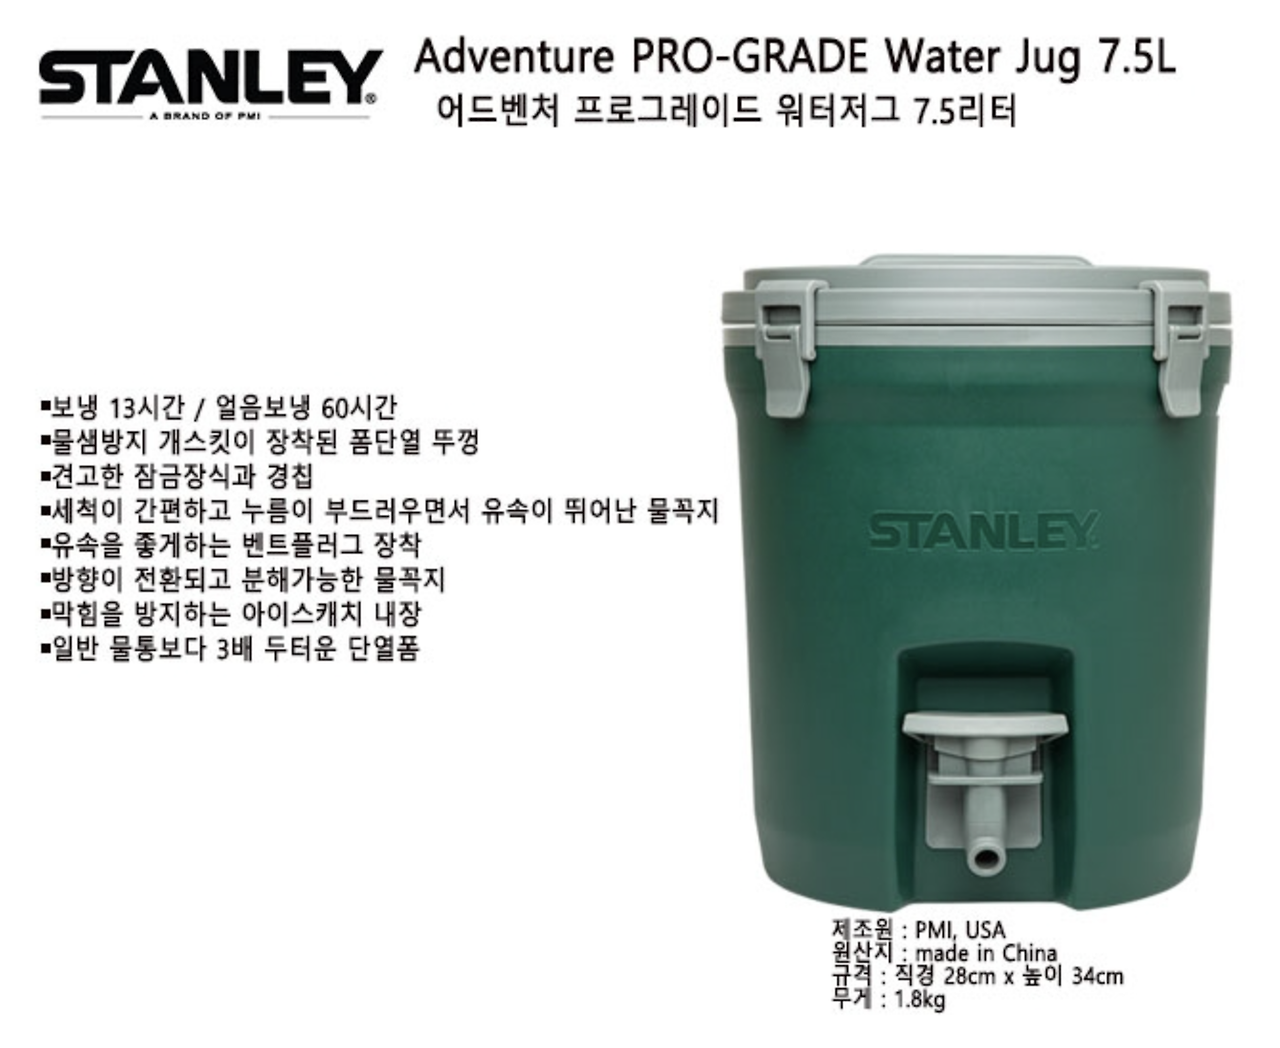 Stanley Adventure Prograde Water Jug 7.5L